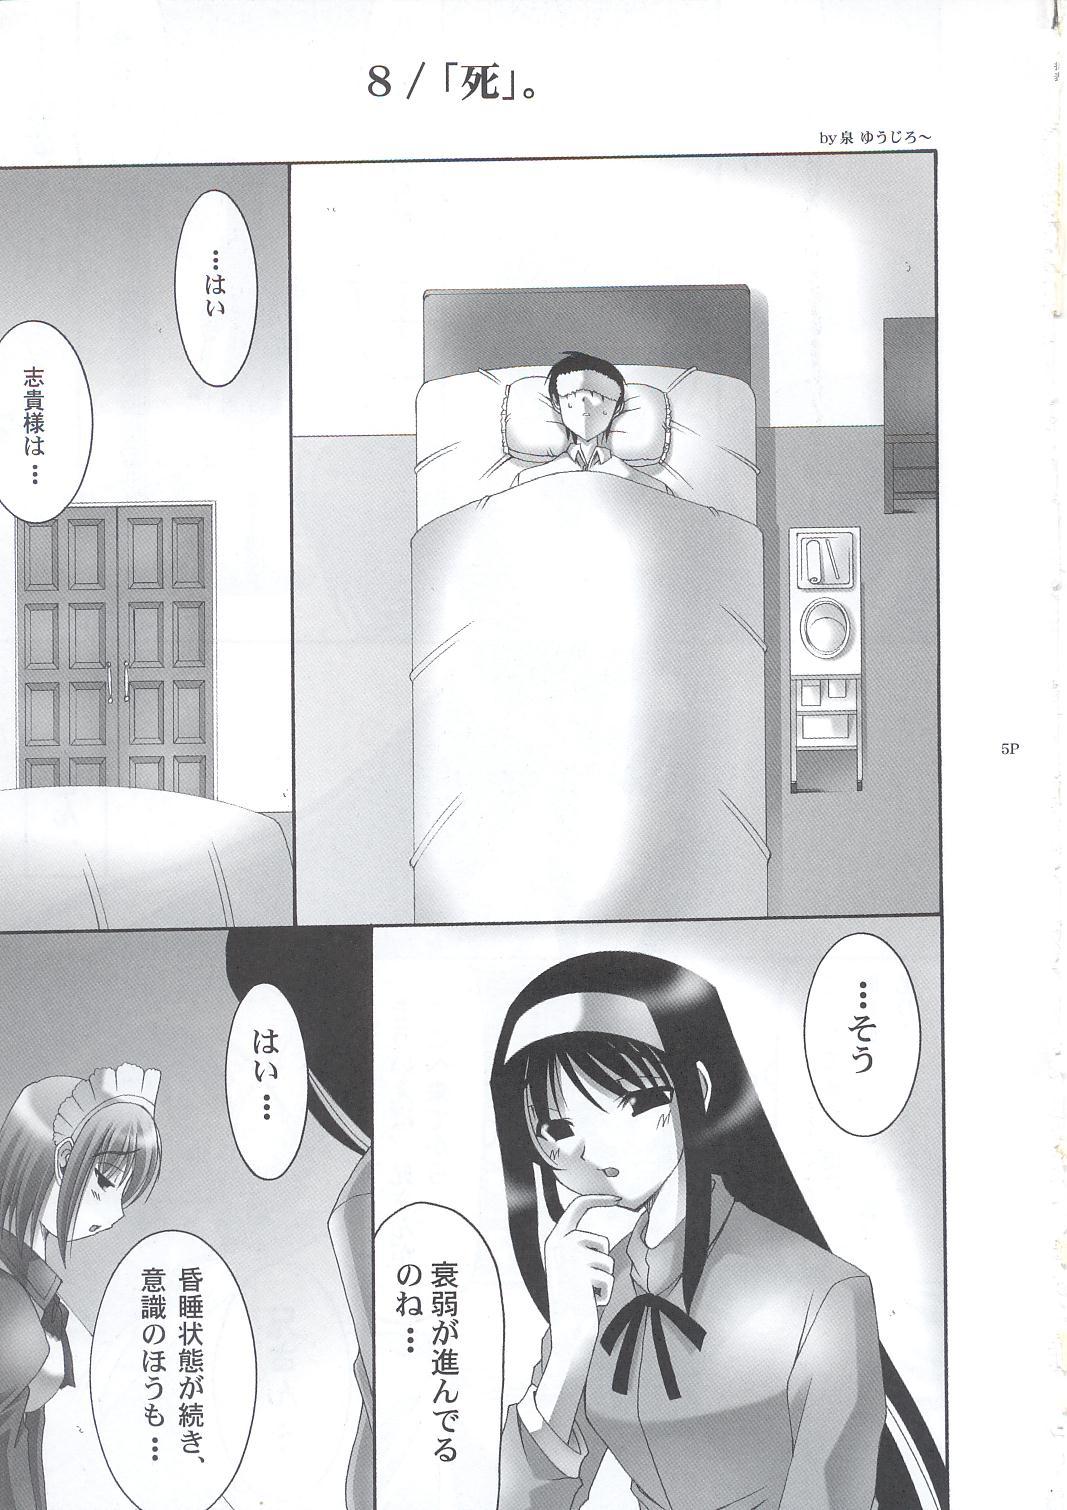 Cogiendo ABARETSUKIYO 4 - Tsukihime Full Movie - Page 4